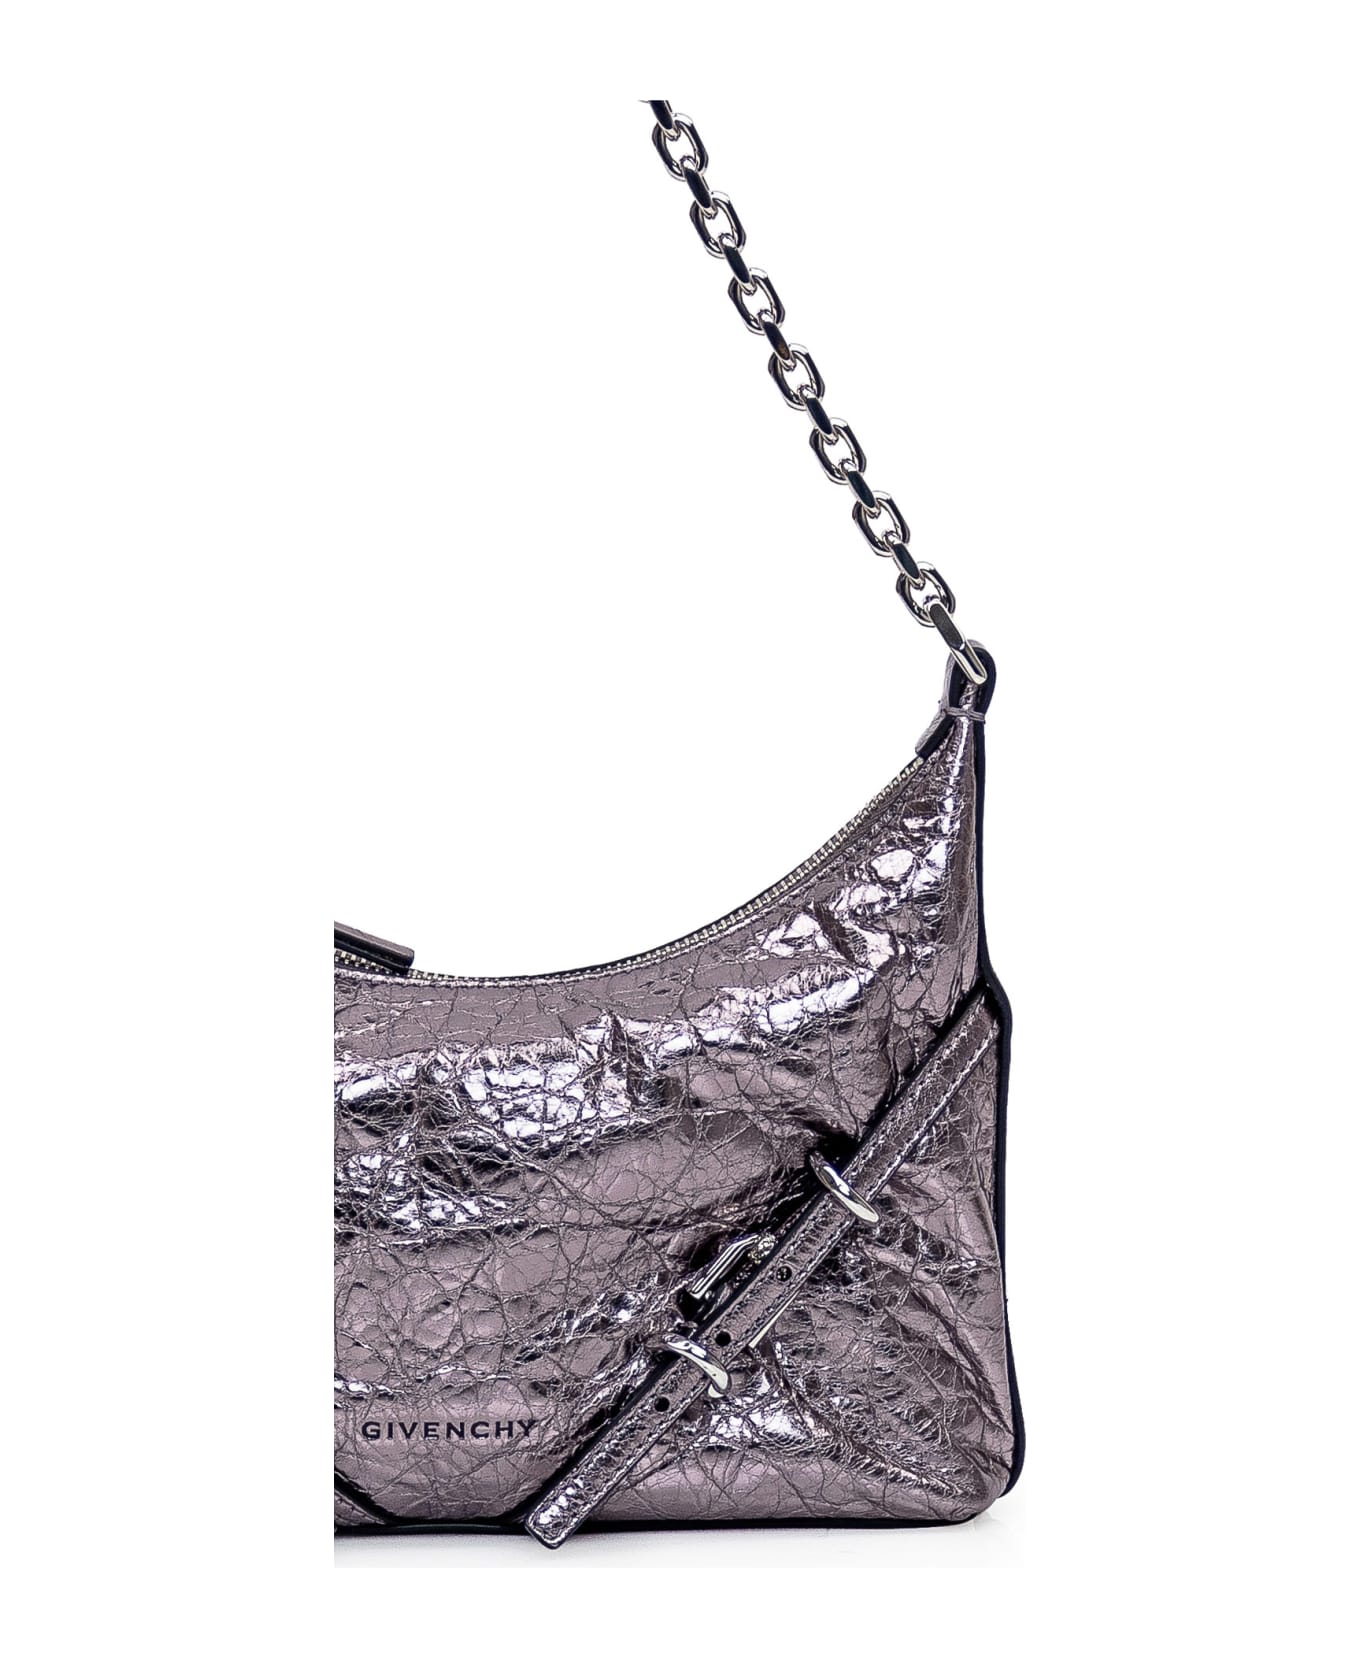 Givenchy Voyou Party Shoulder Bag - SILVER GREY トートバッグ